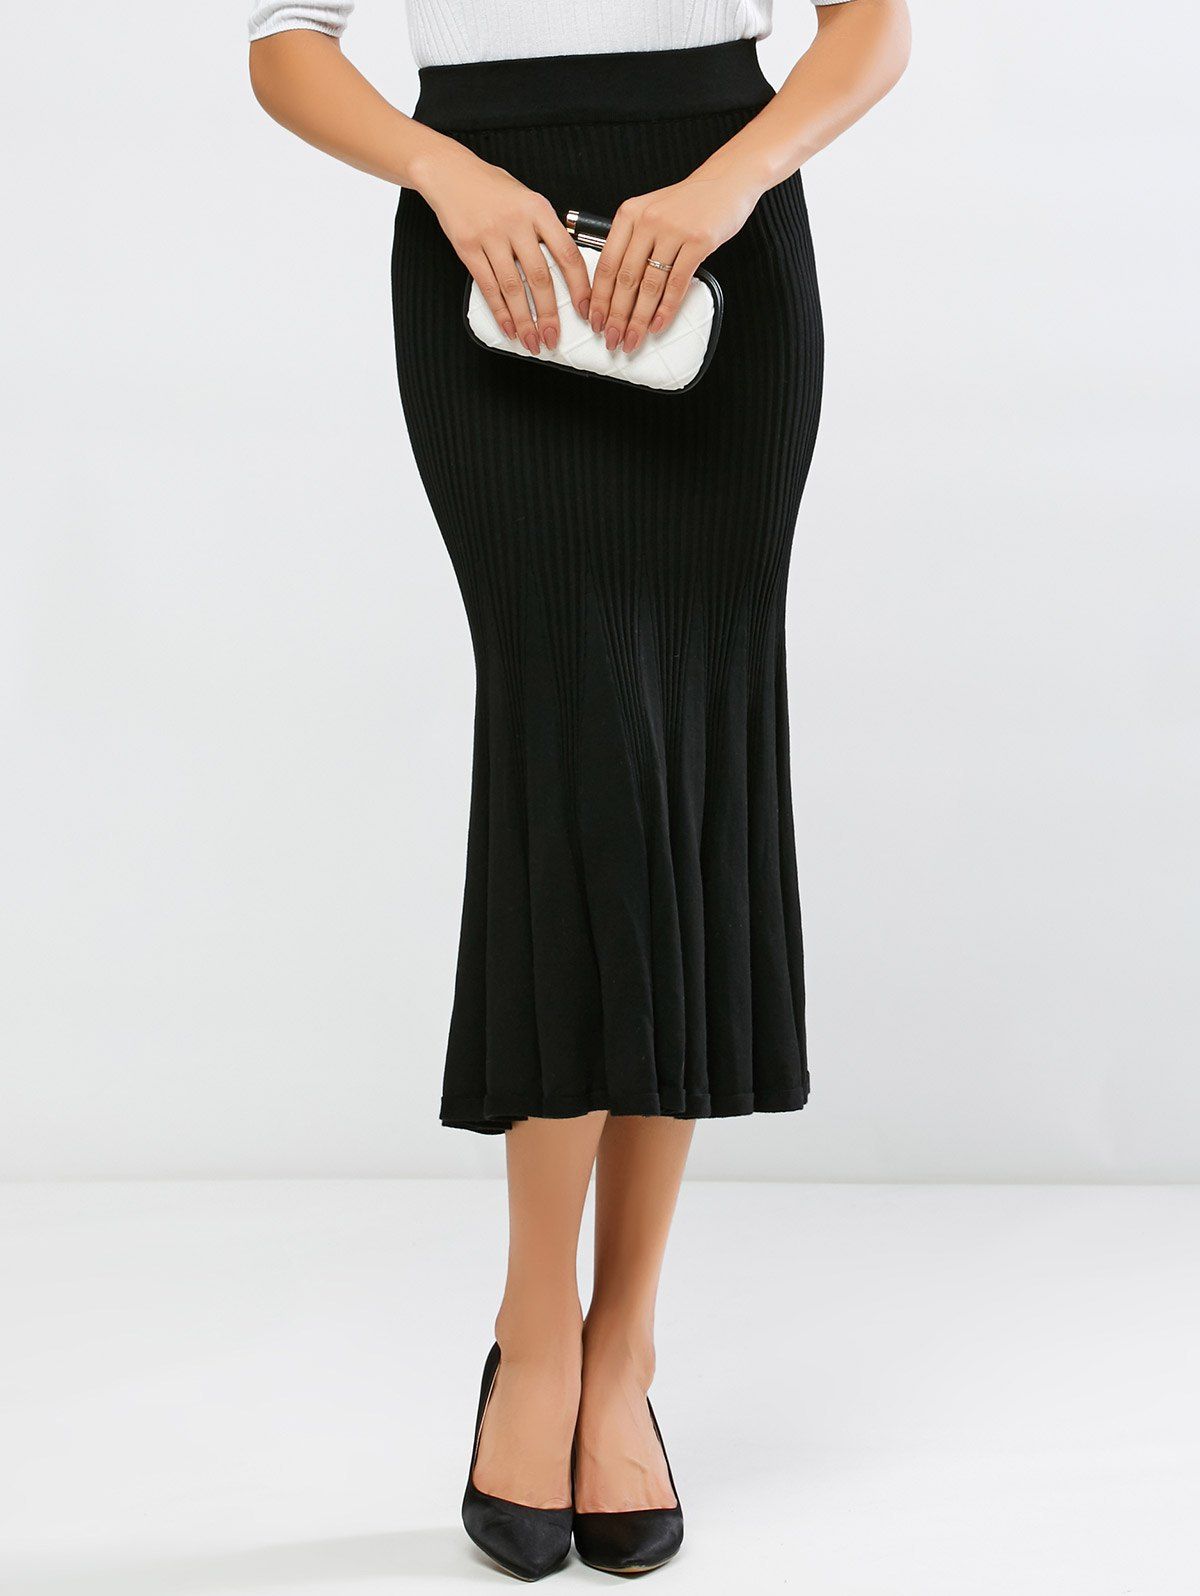 [17% OFF] 2021 High Waisted Mermaid Knit Midi Skirt In BLACK | DressLily